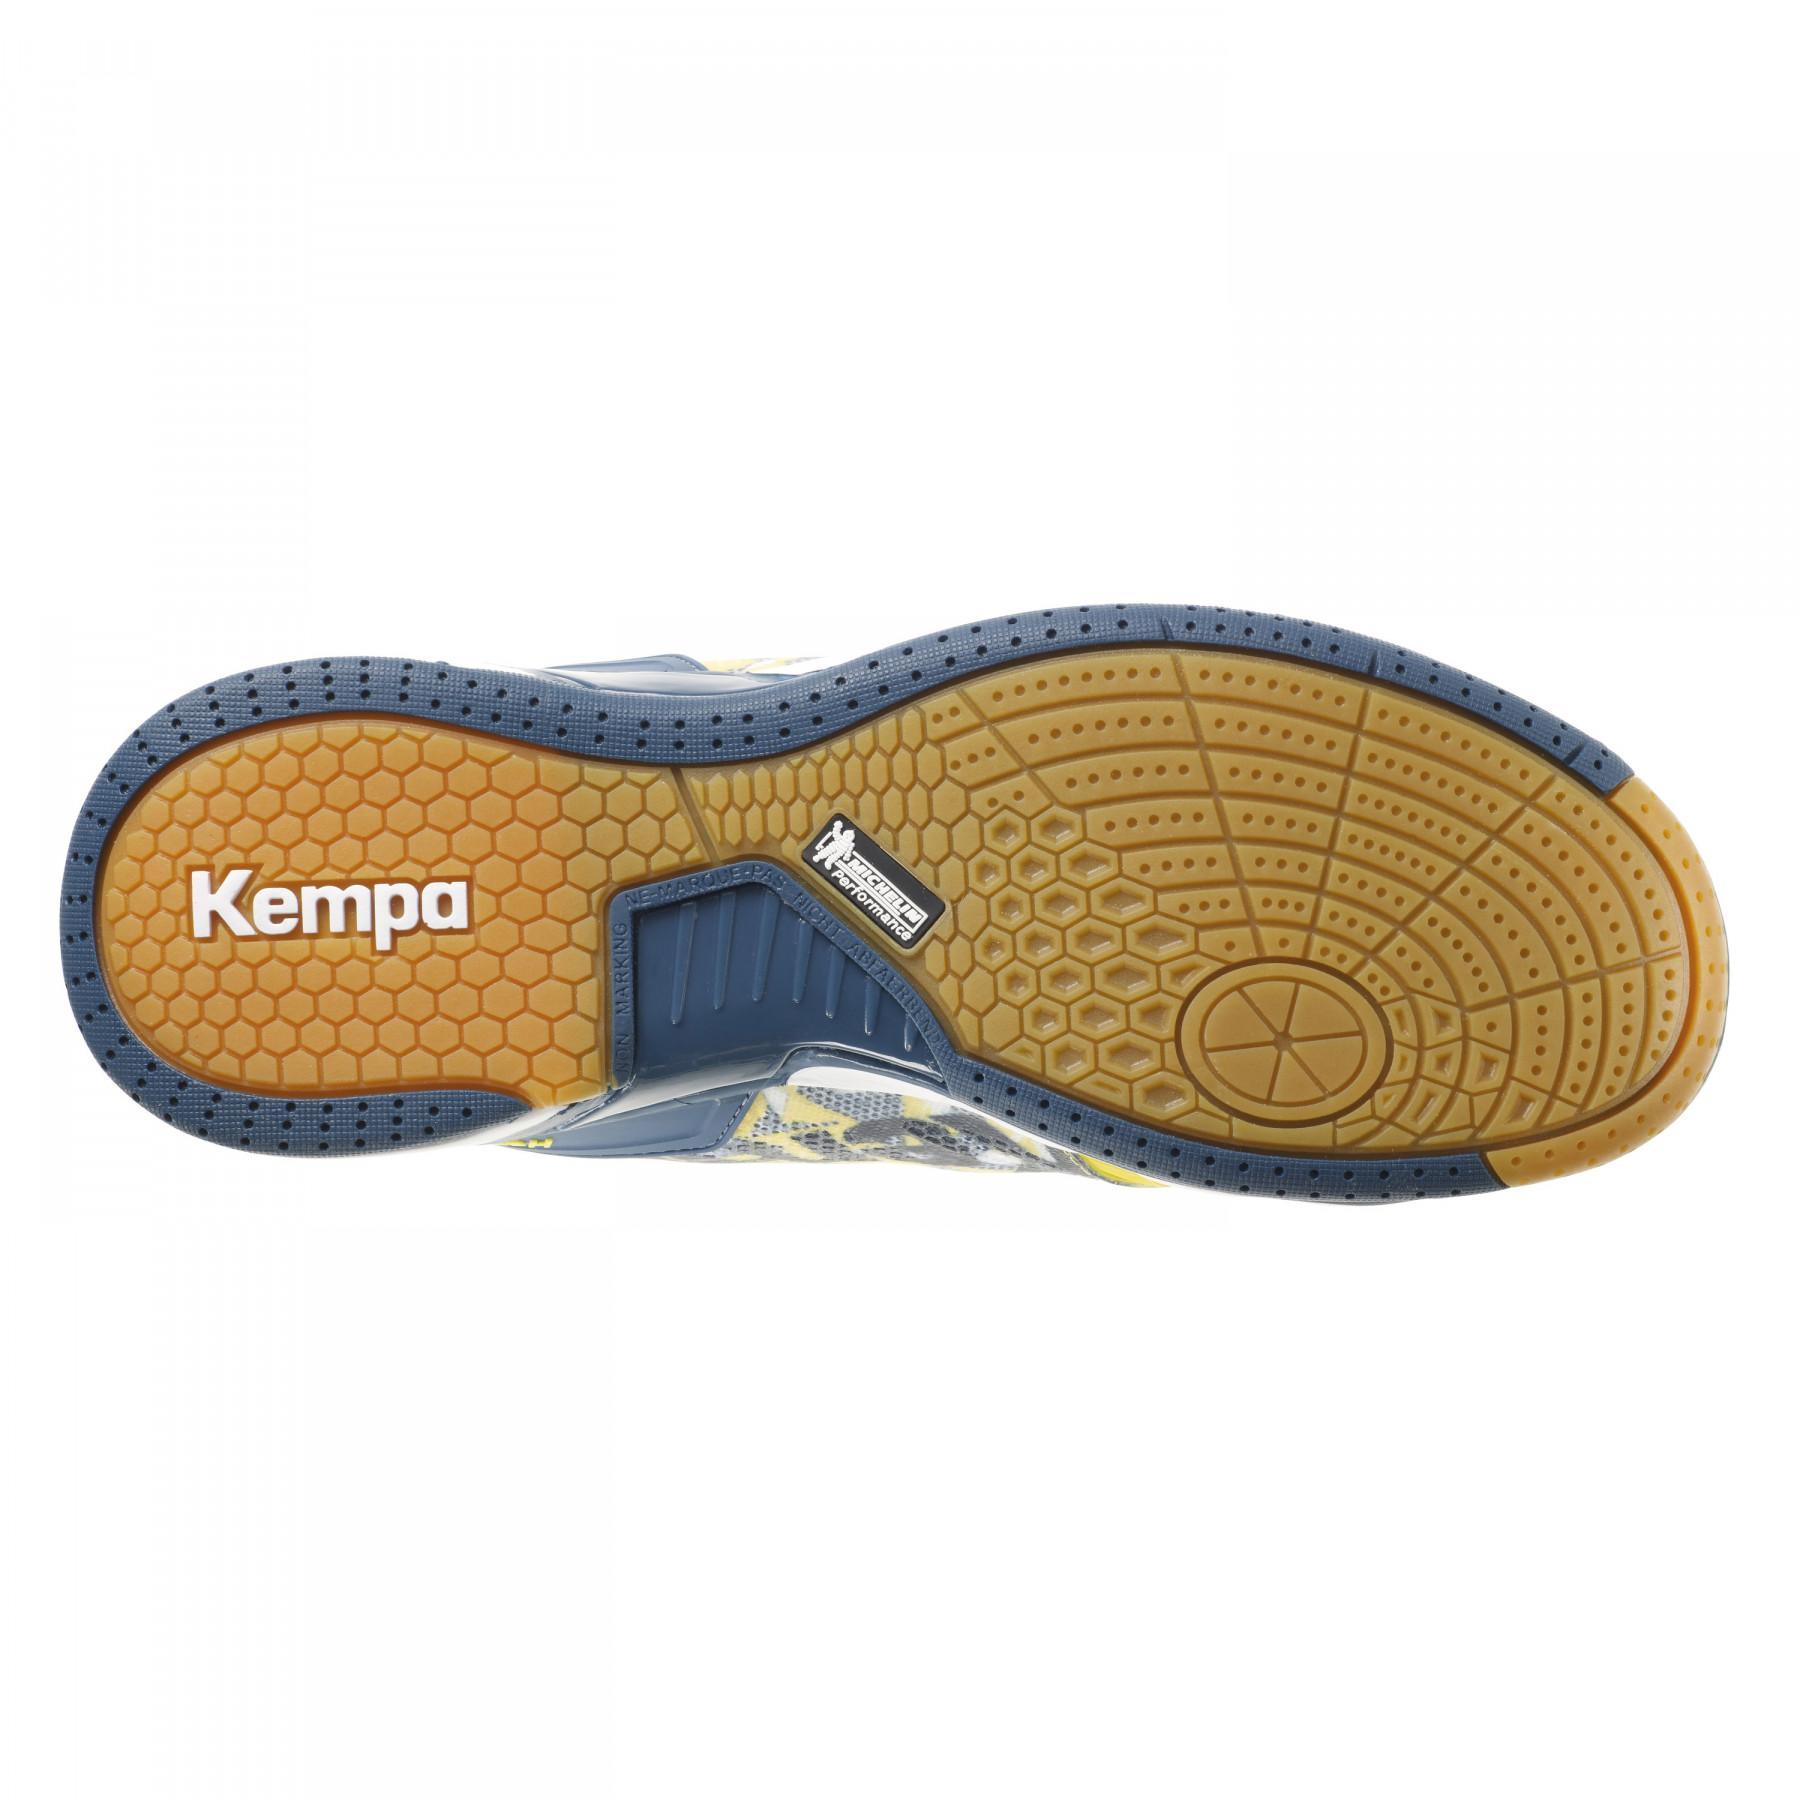 Zapatos Kempa Attack One